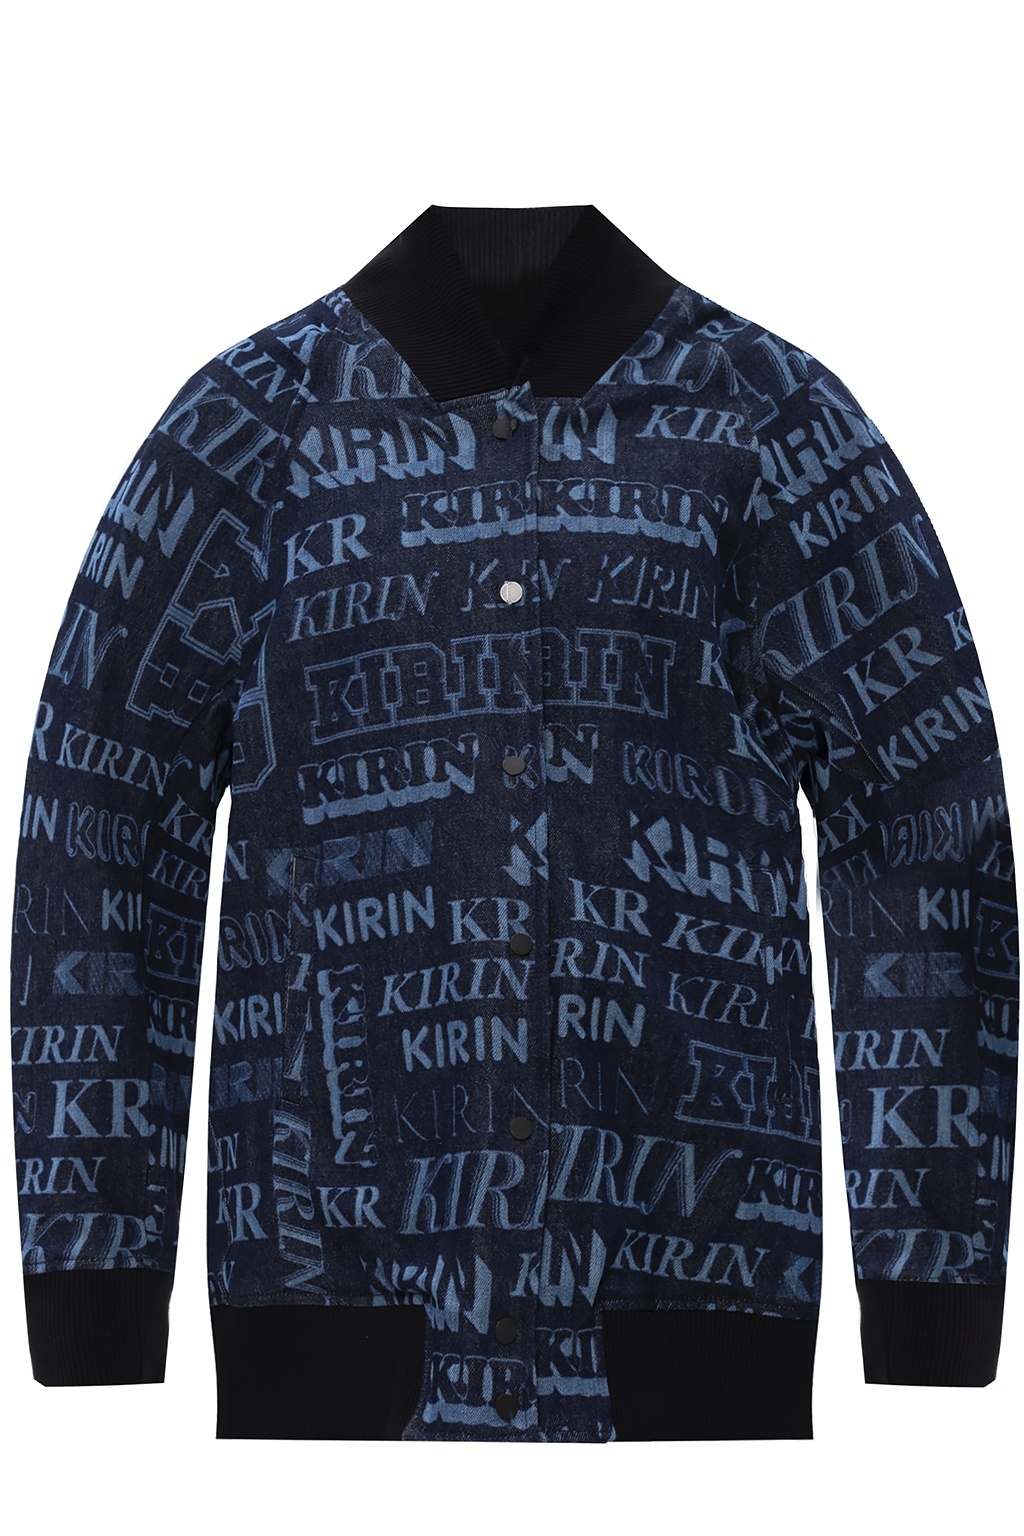 Kirin Bomber jacket with logo